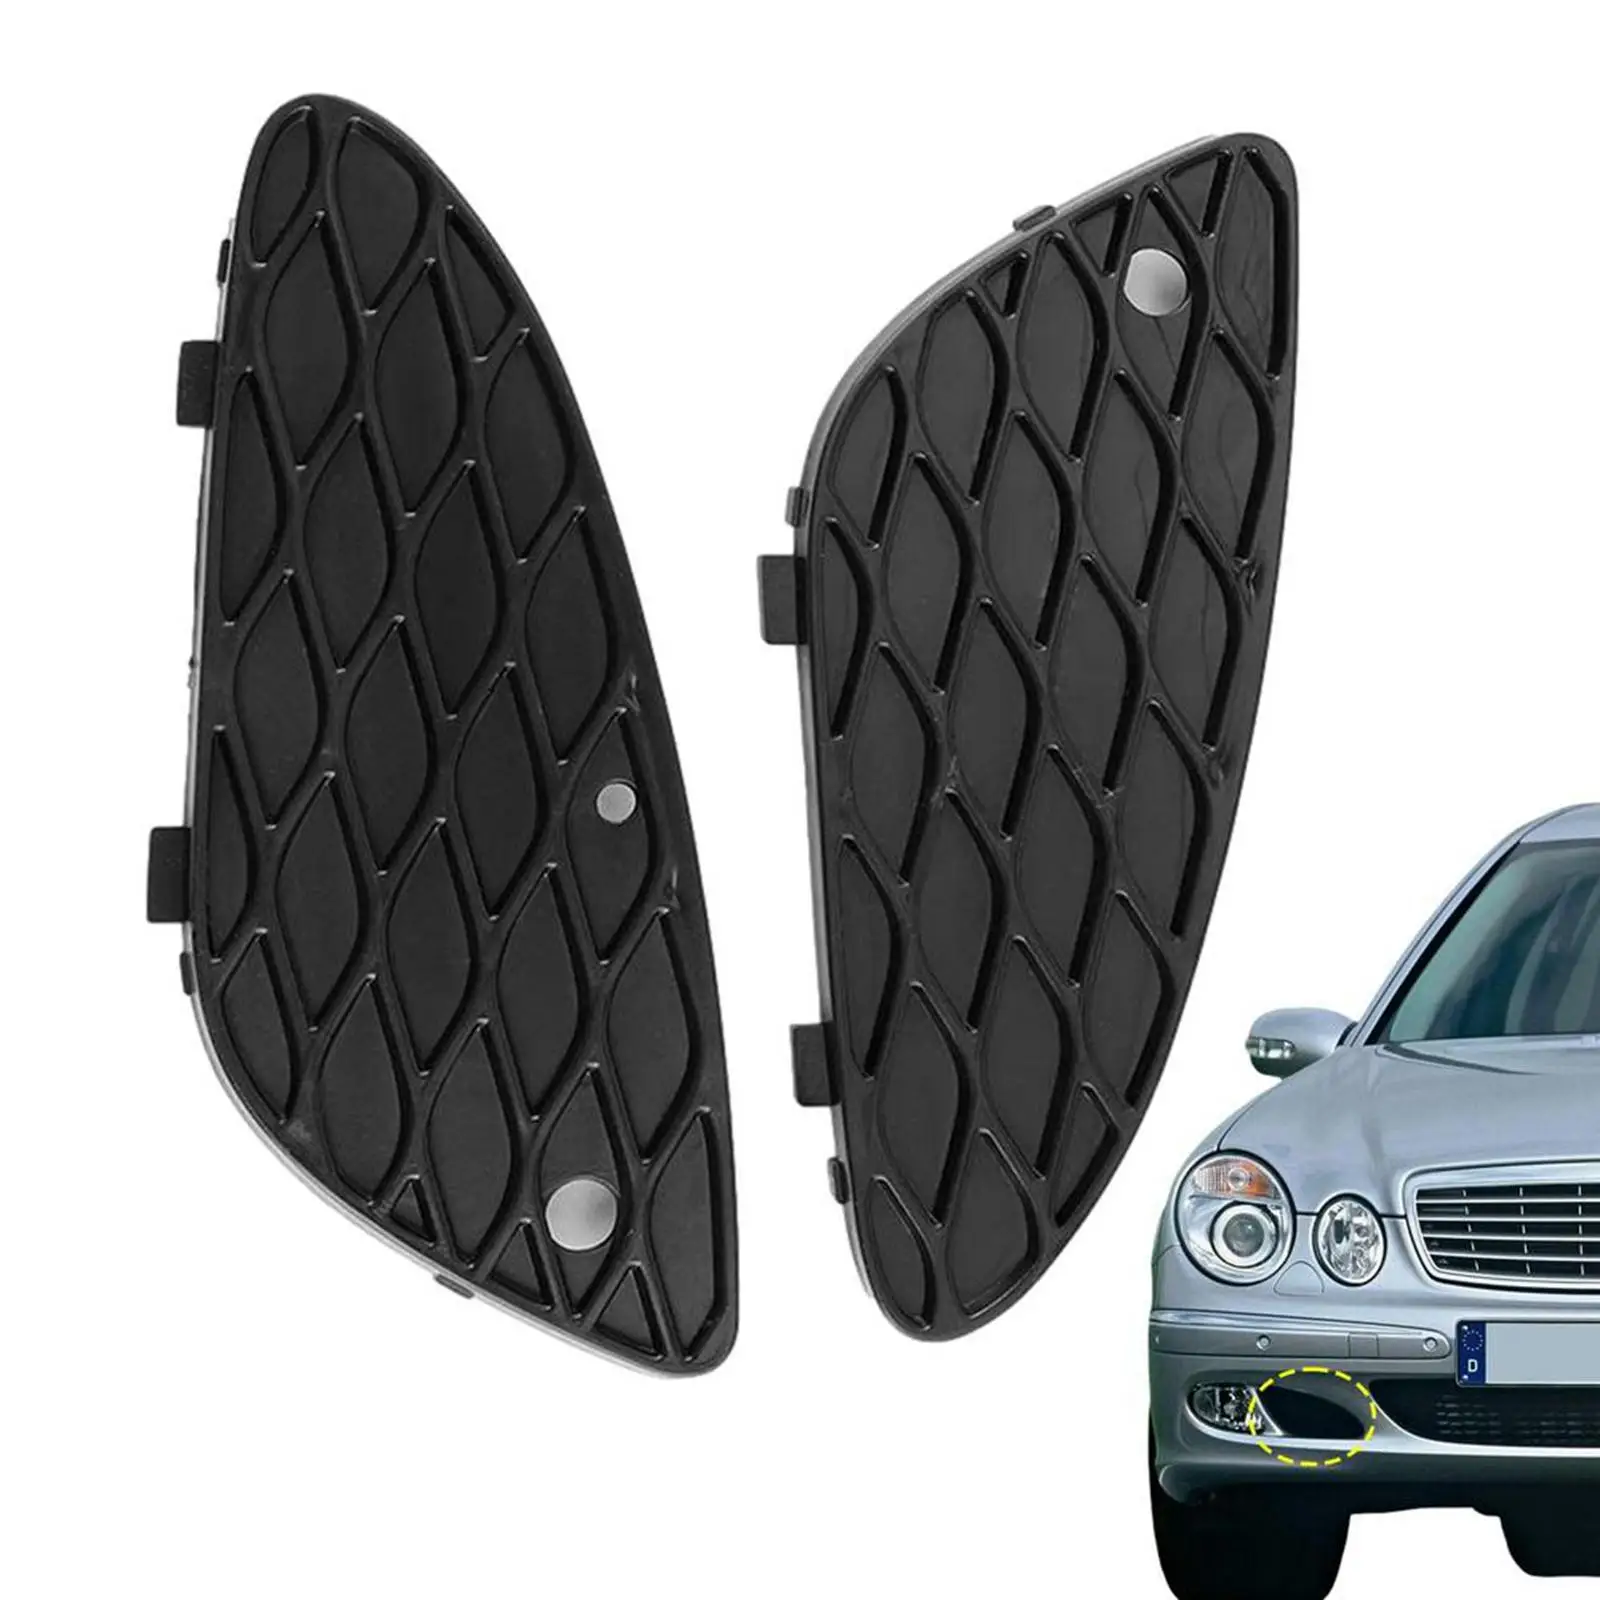 Replacement Front Bumper Cover Black Durable for Mercedes-benz E-class W211 2003-2006 Accessories Convenient Installation